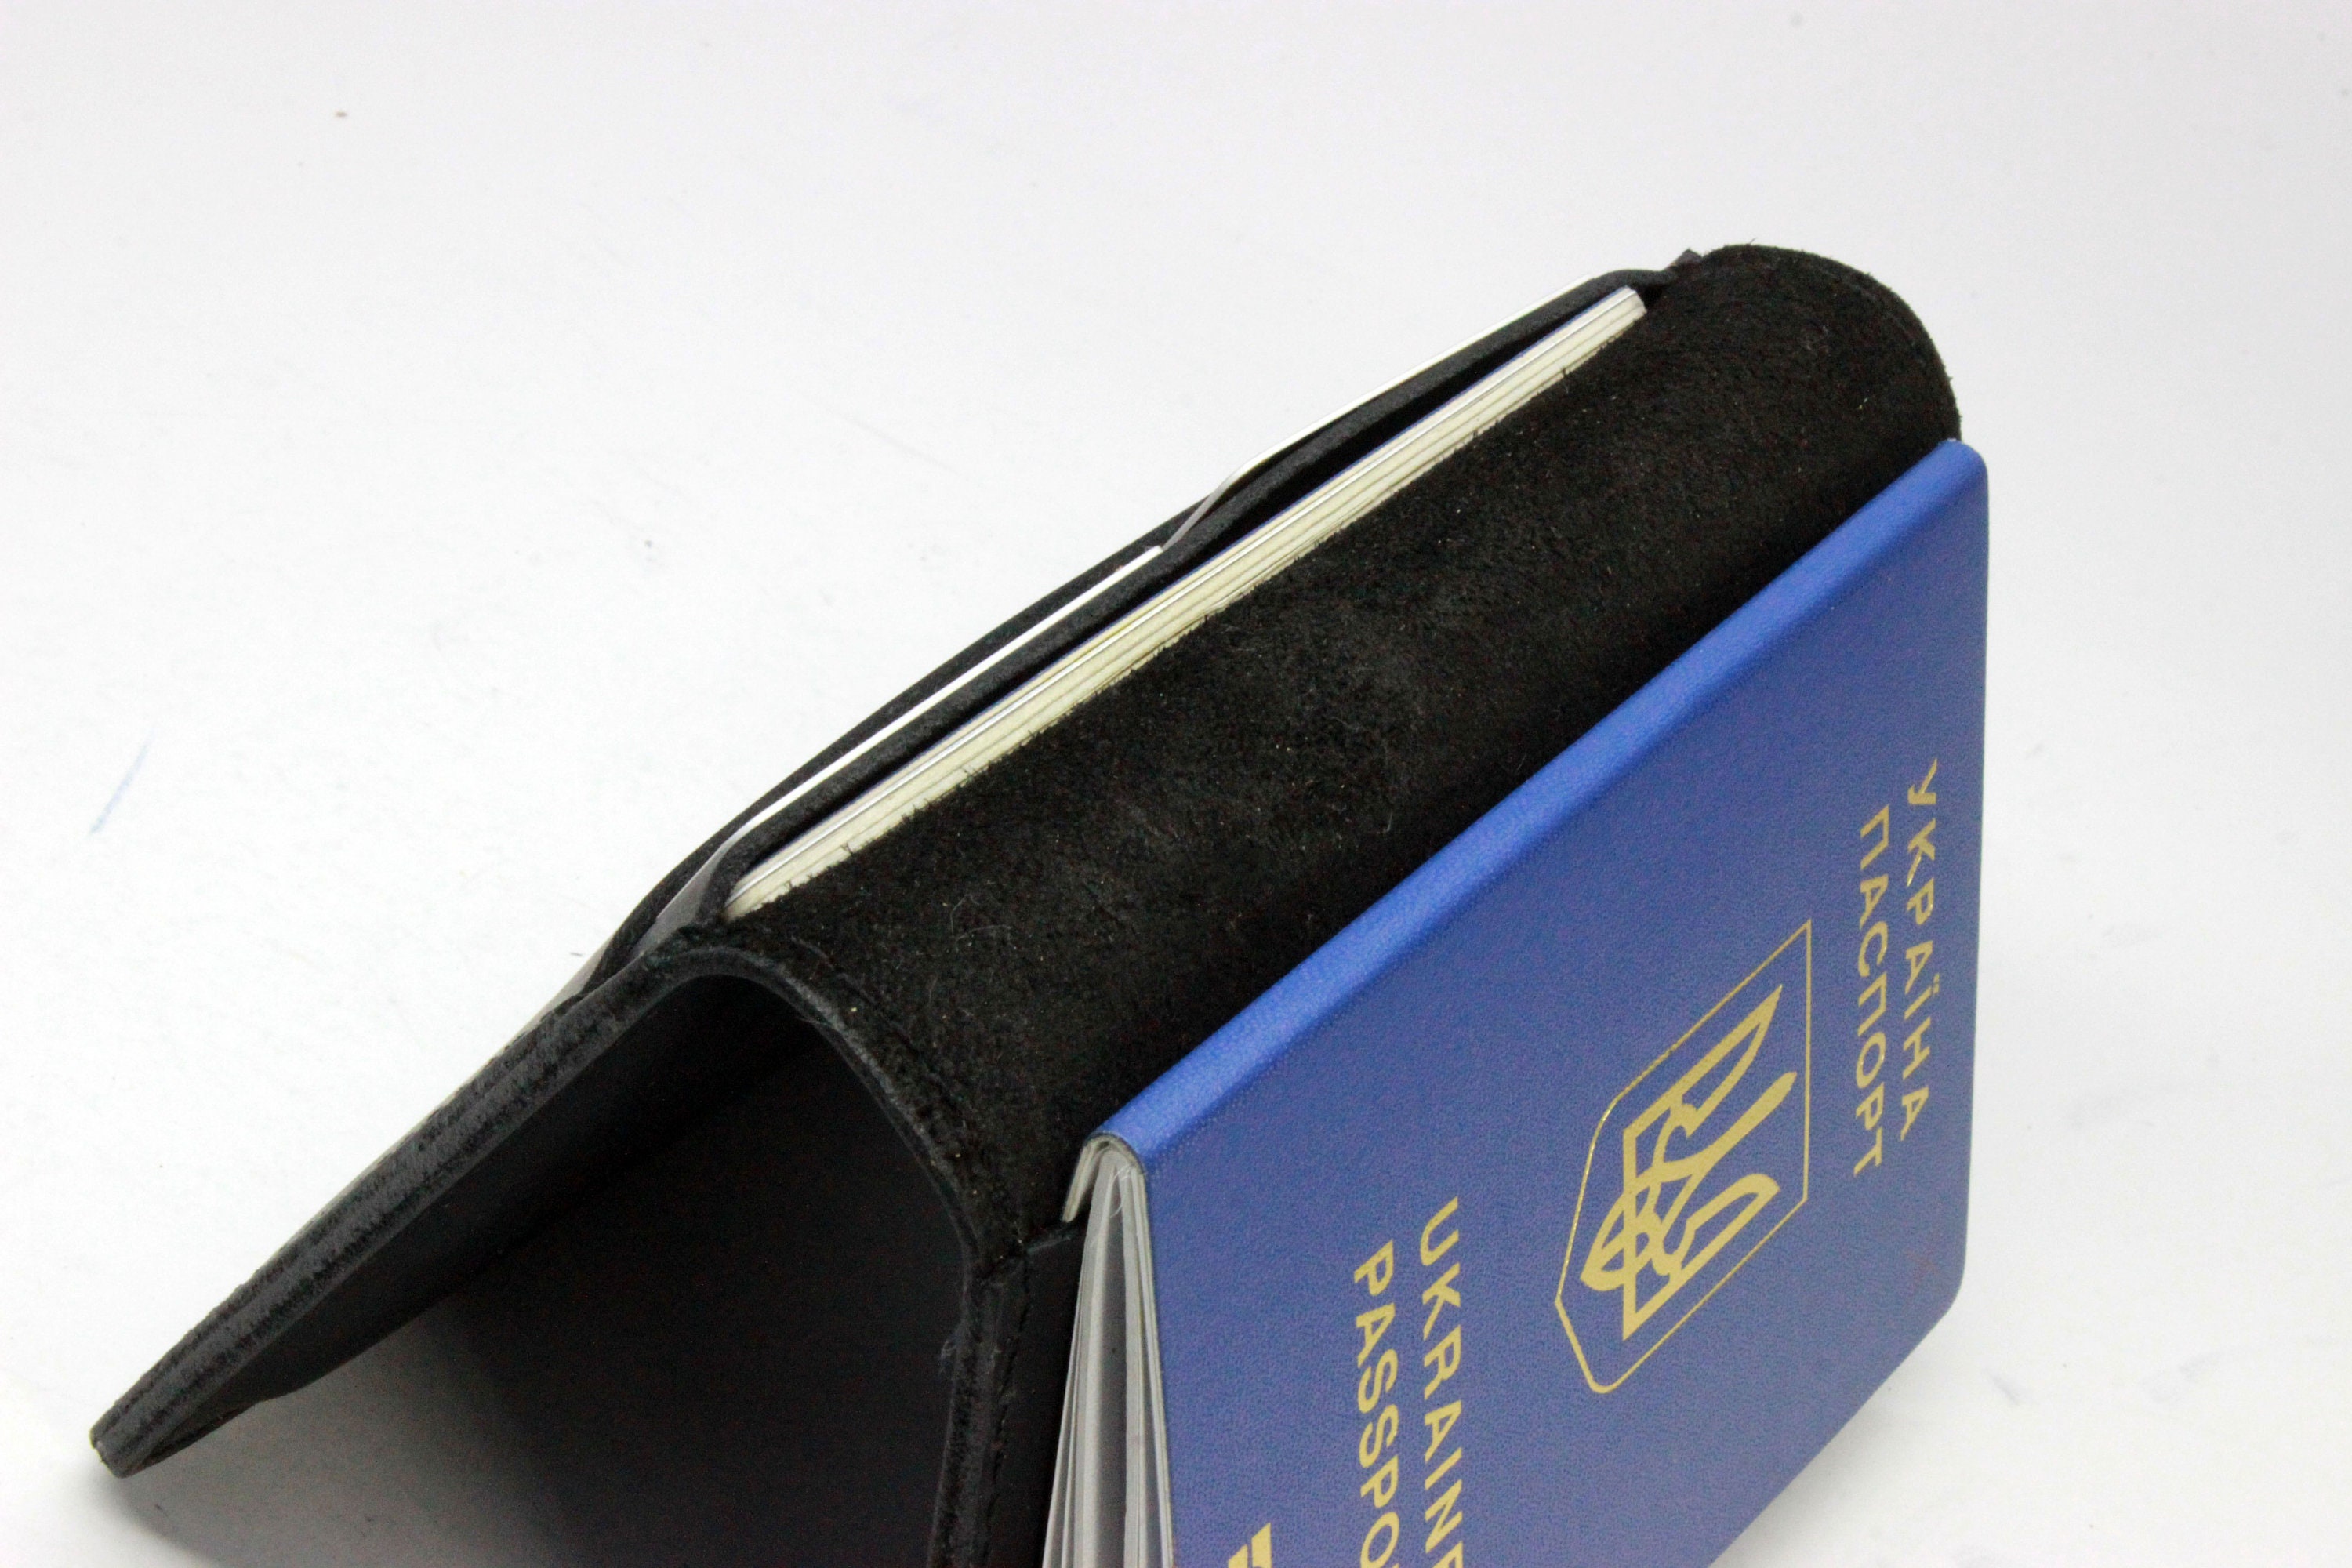 dual passport travel wallet